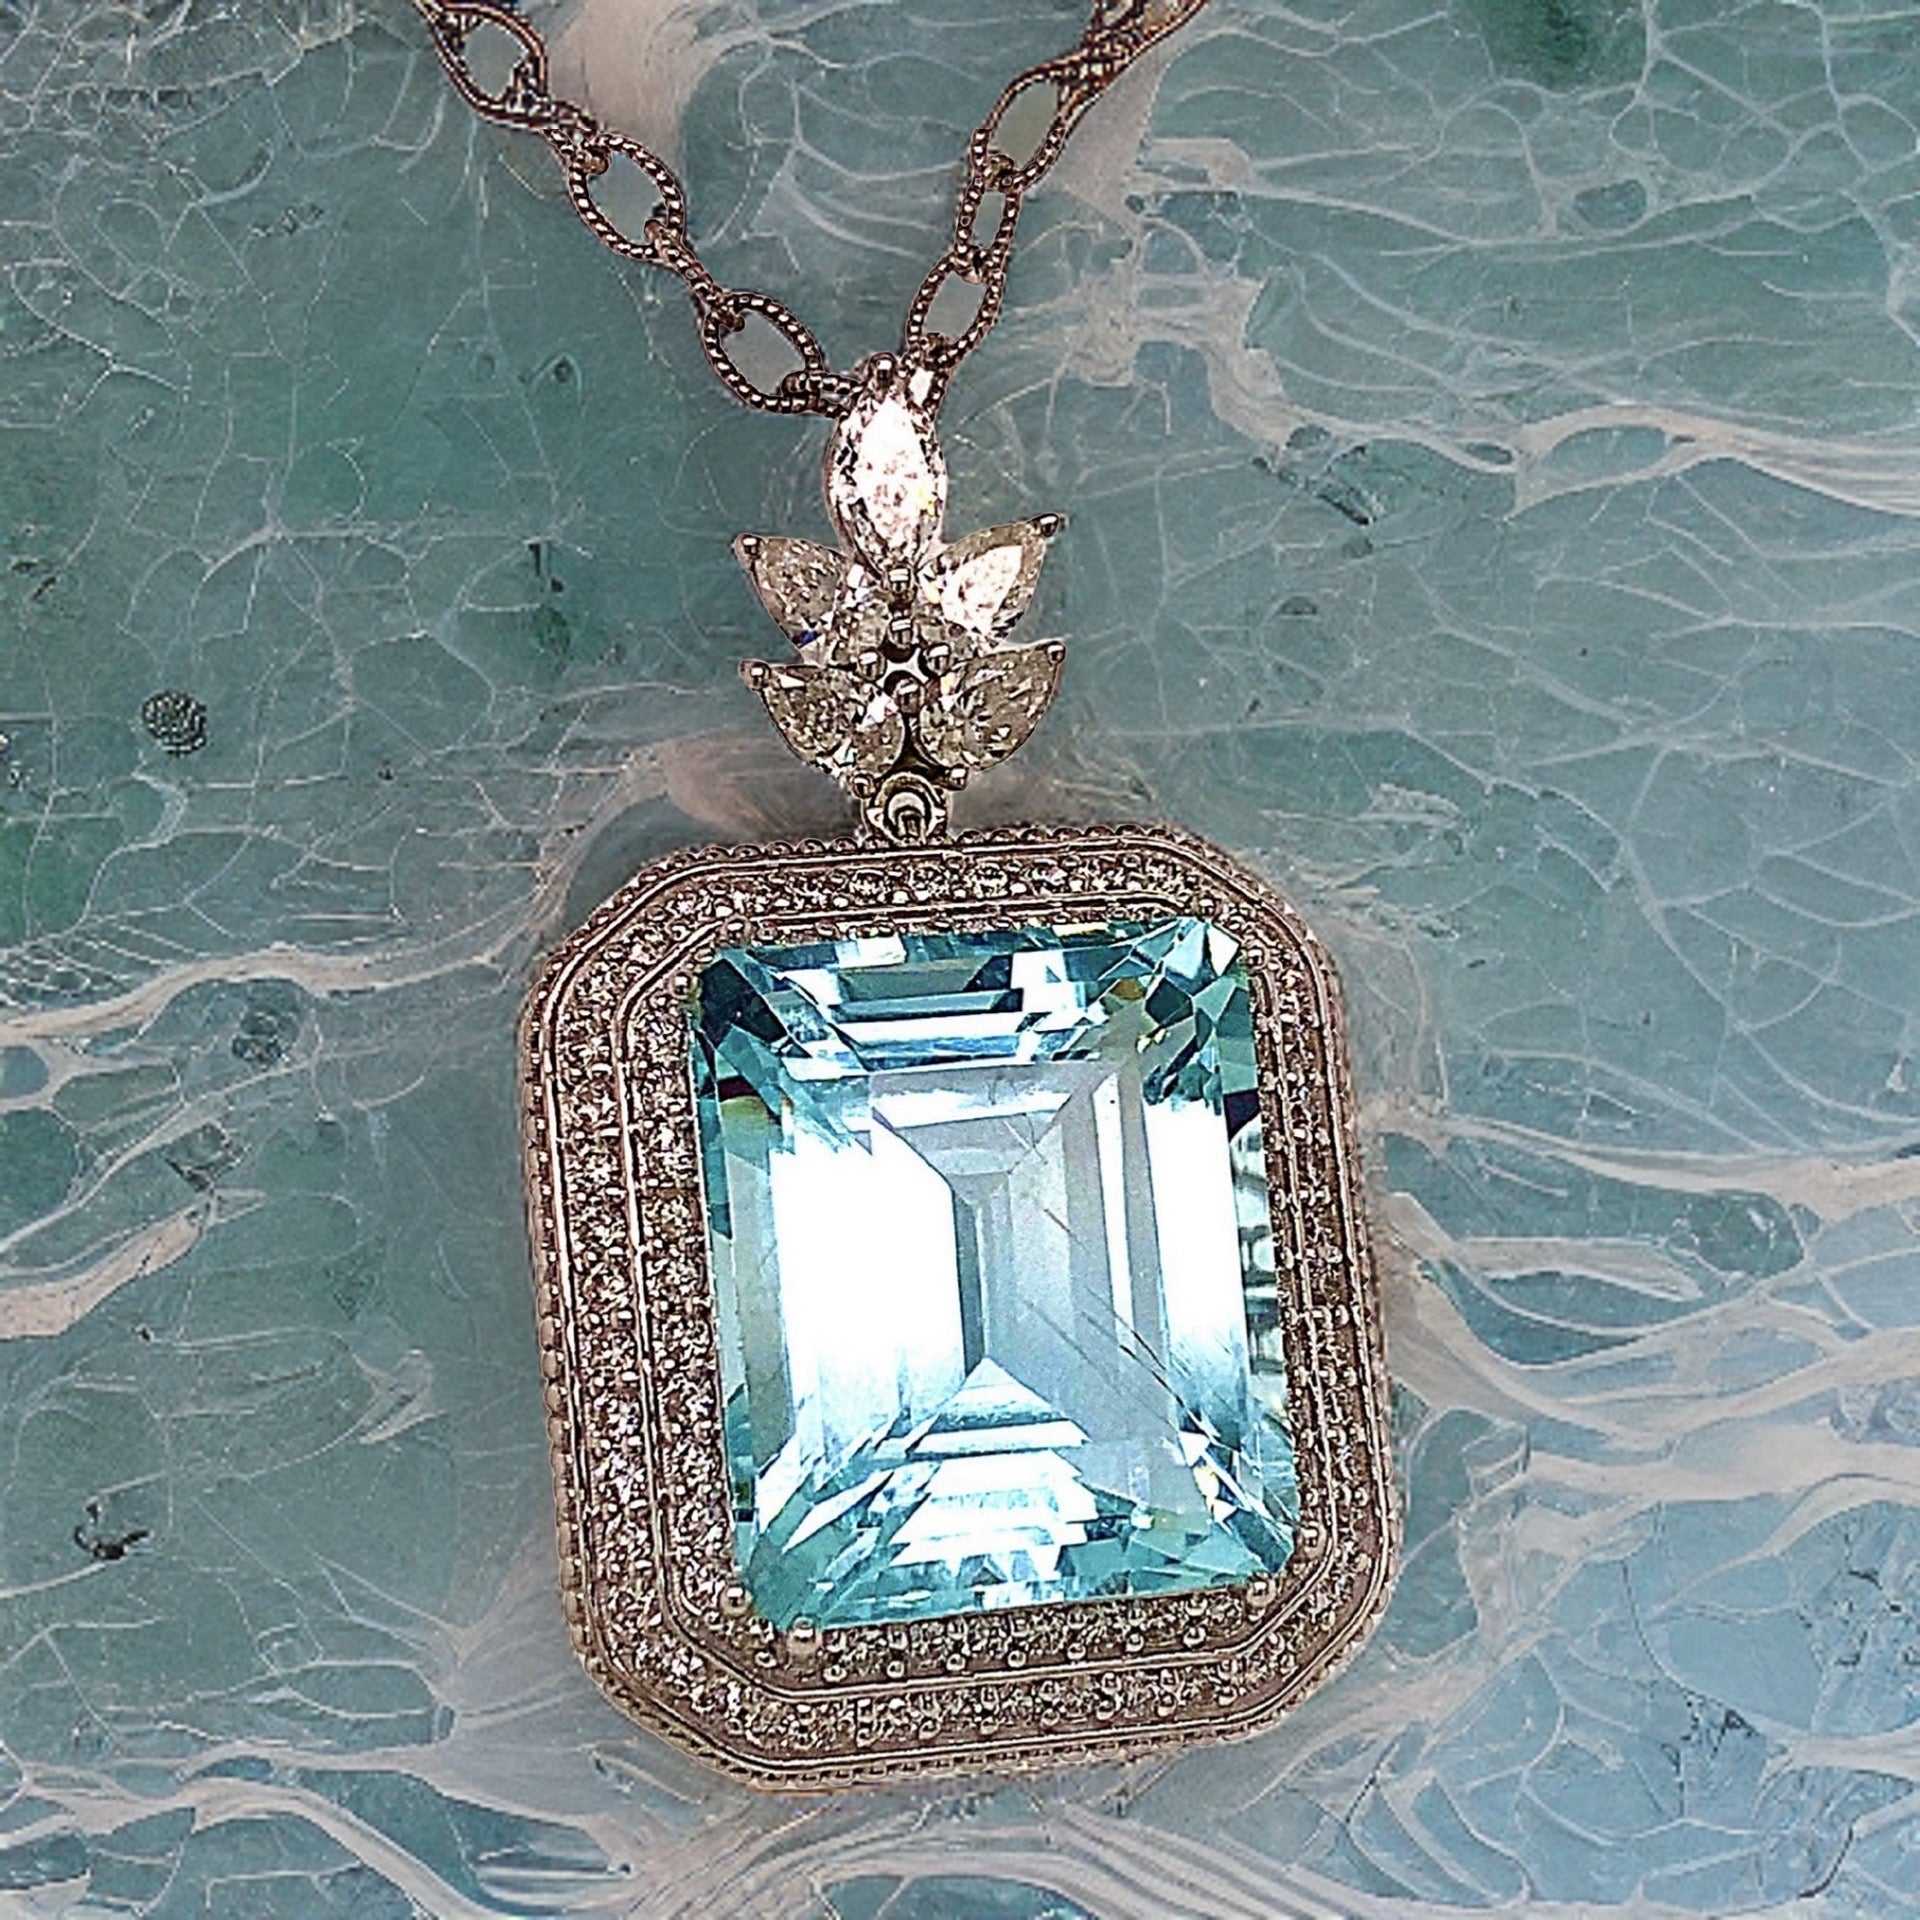 Natural Aquamarine Diamond Necklace 14k Gold 10.45 TCW Certified $9,520 211196 - Certified Fine Jewelry